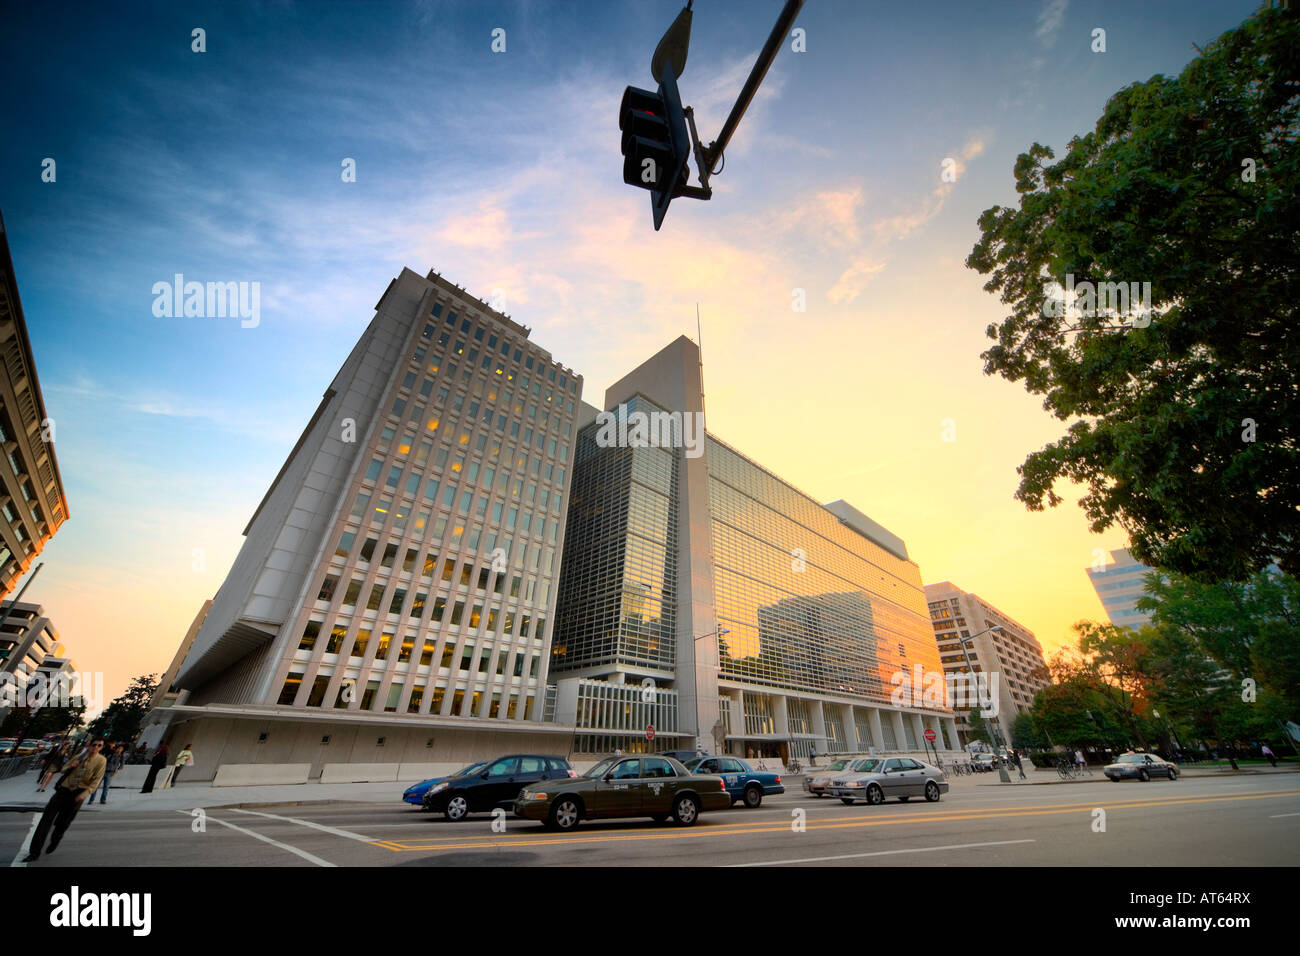 Die Weltbankgruppe Hauptgebäude, 1800 H Street NW, Pennsylvania Avenue, Washington DC, USA. Stockfoto